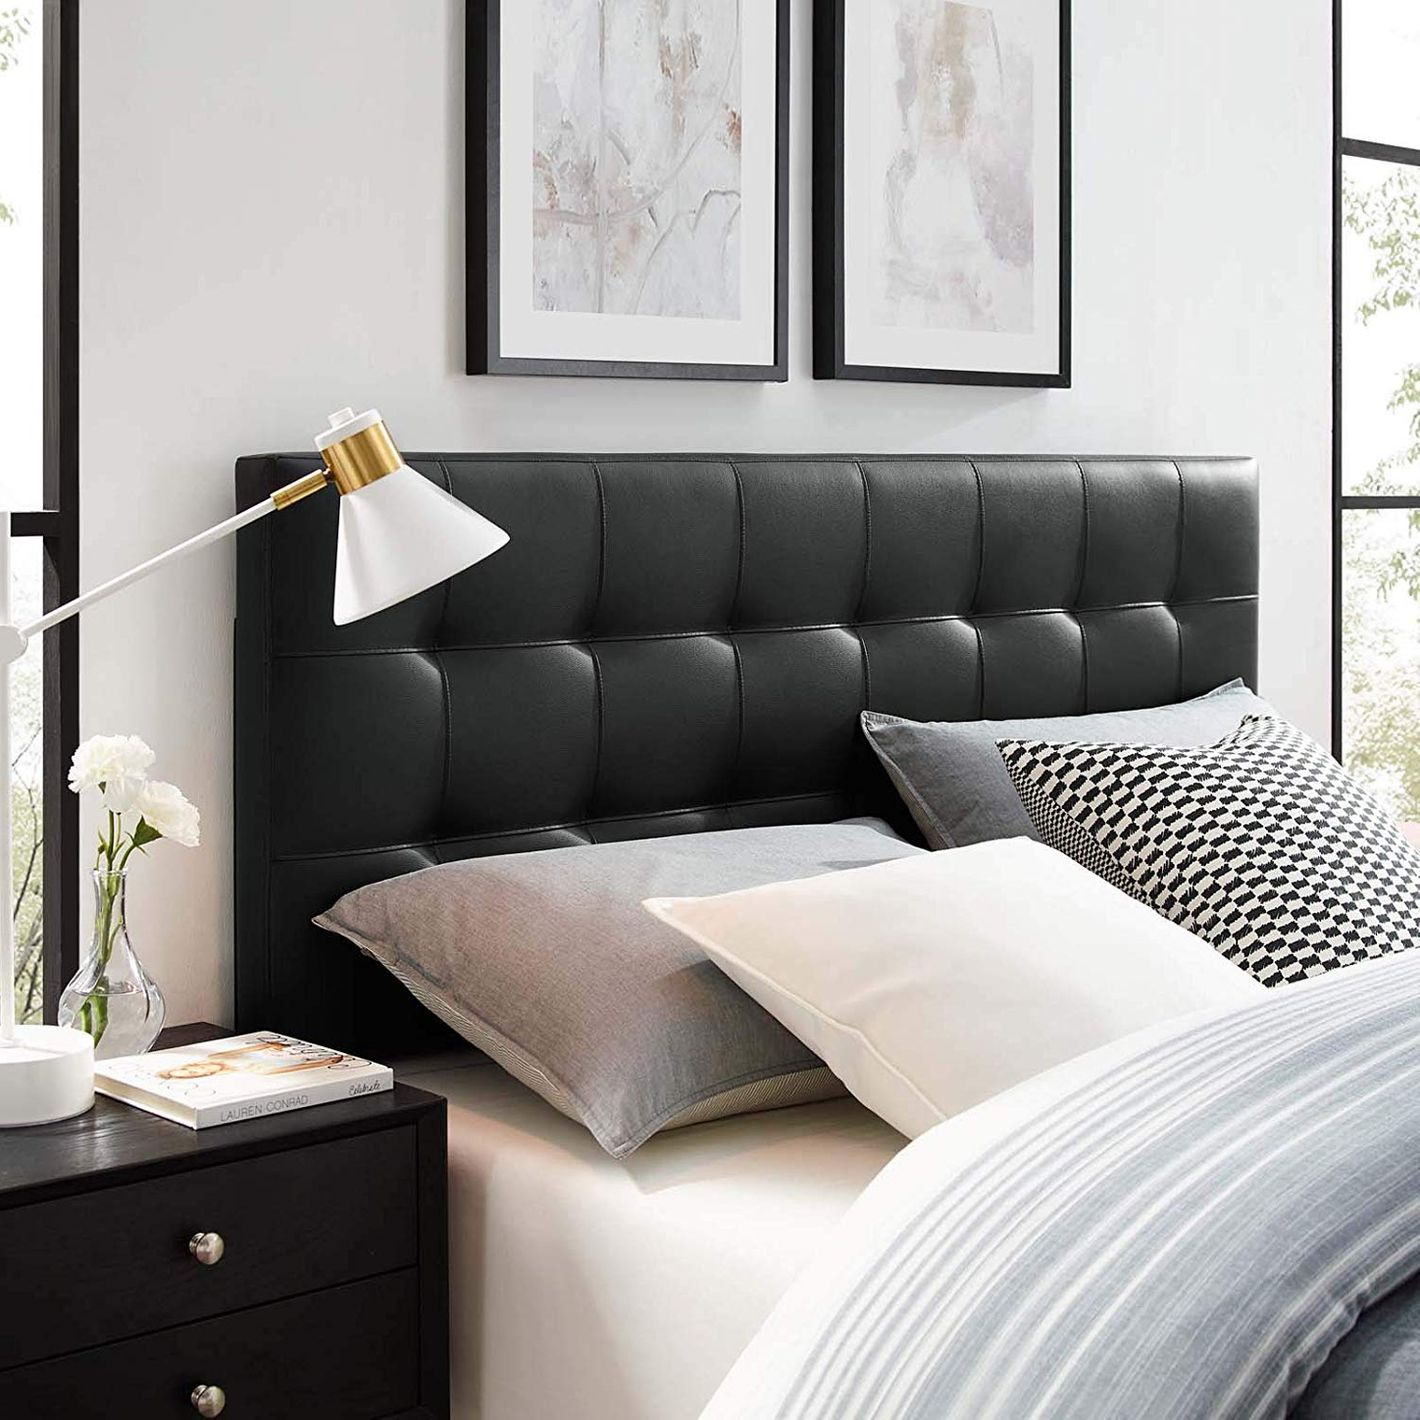 12 Best Headboards 2019 The Strategist, King Single Upholstered Bed Frame